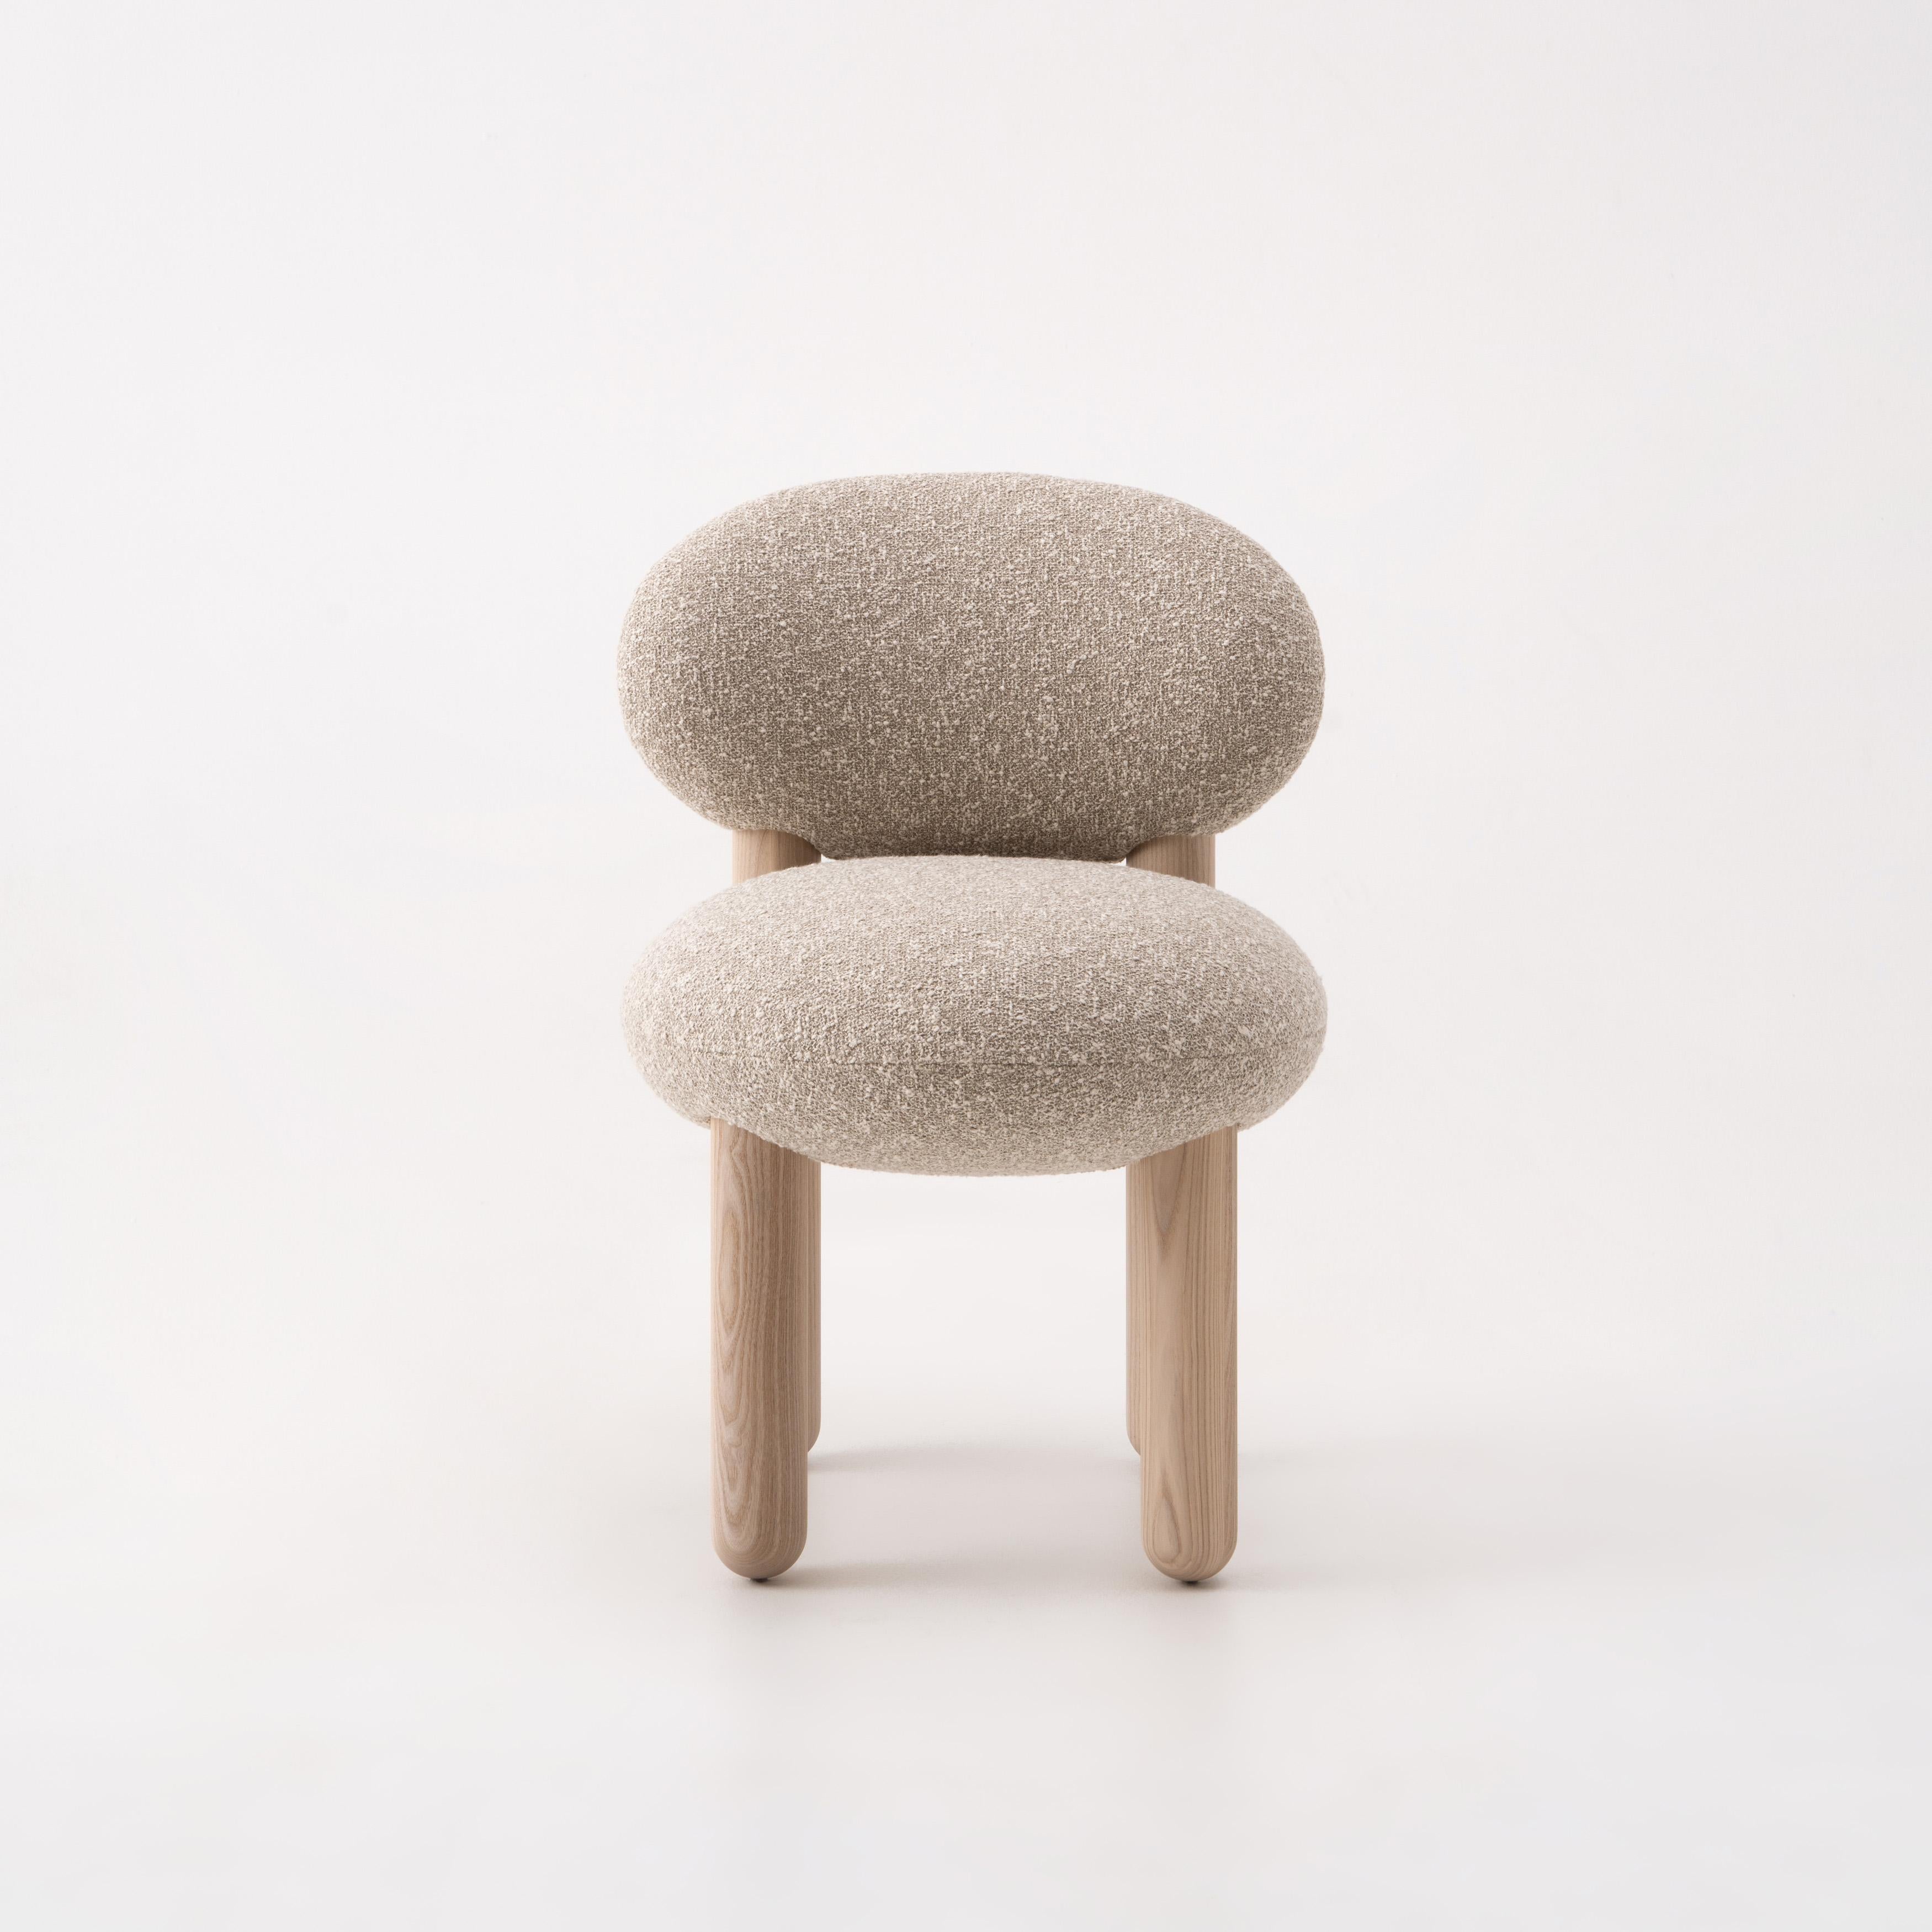 Dining Chair Flock CS2
Designer: Kateryna Sokolova for Noom

Model shown in the main pictures: 
Legs: natural light ashwood
Upholstery: Kvadrat, Zero col.12

The 